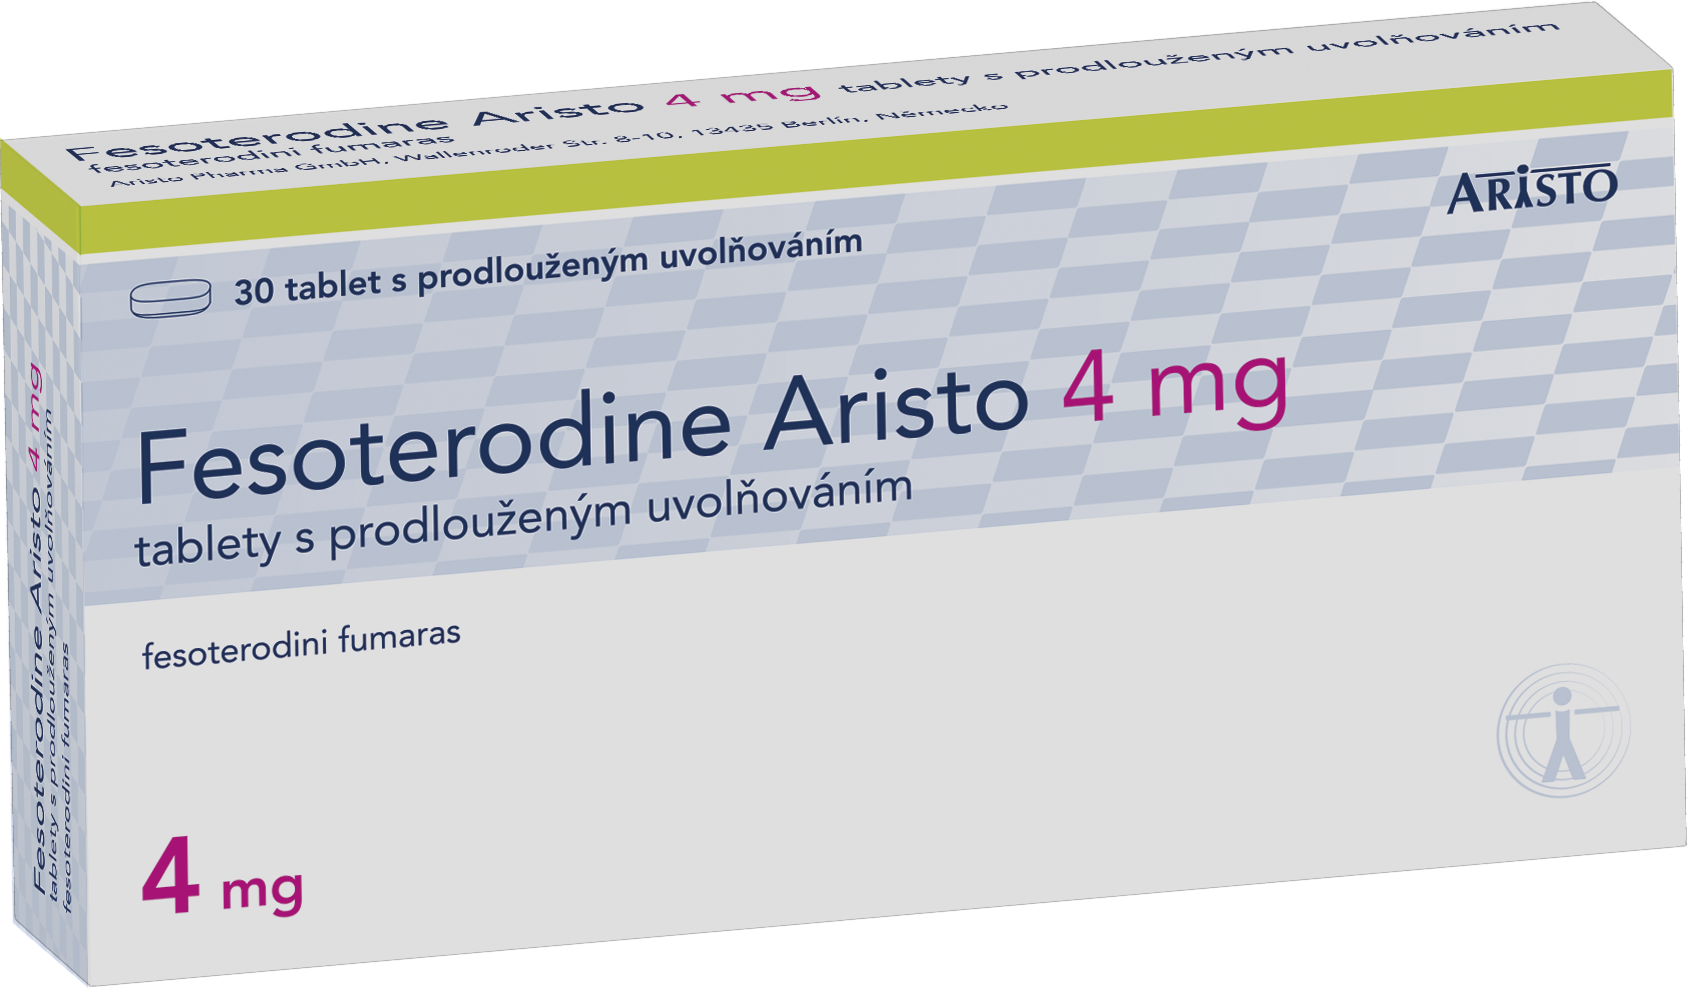 Fesoterodine Aristo 4 mg